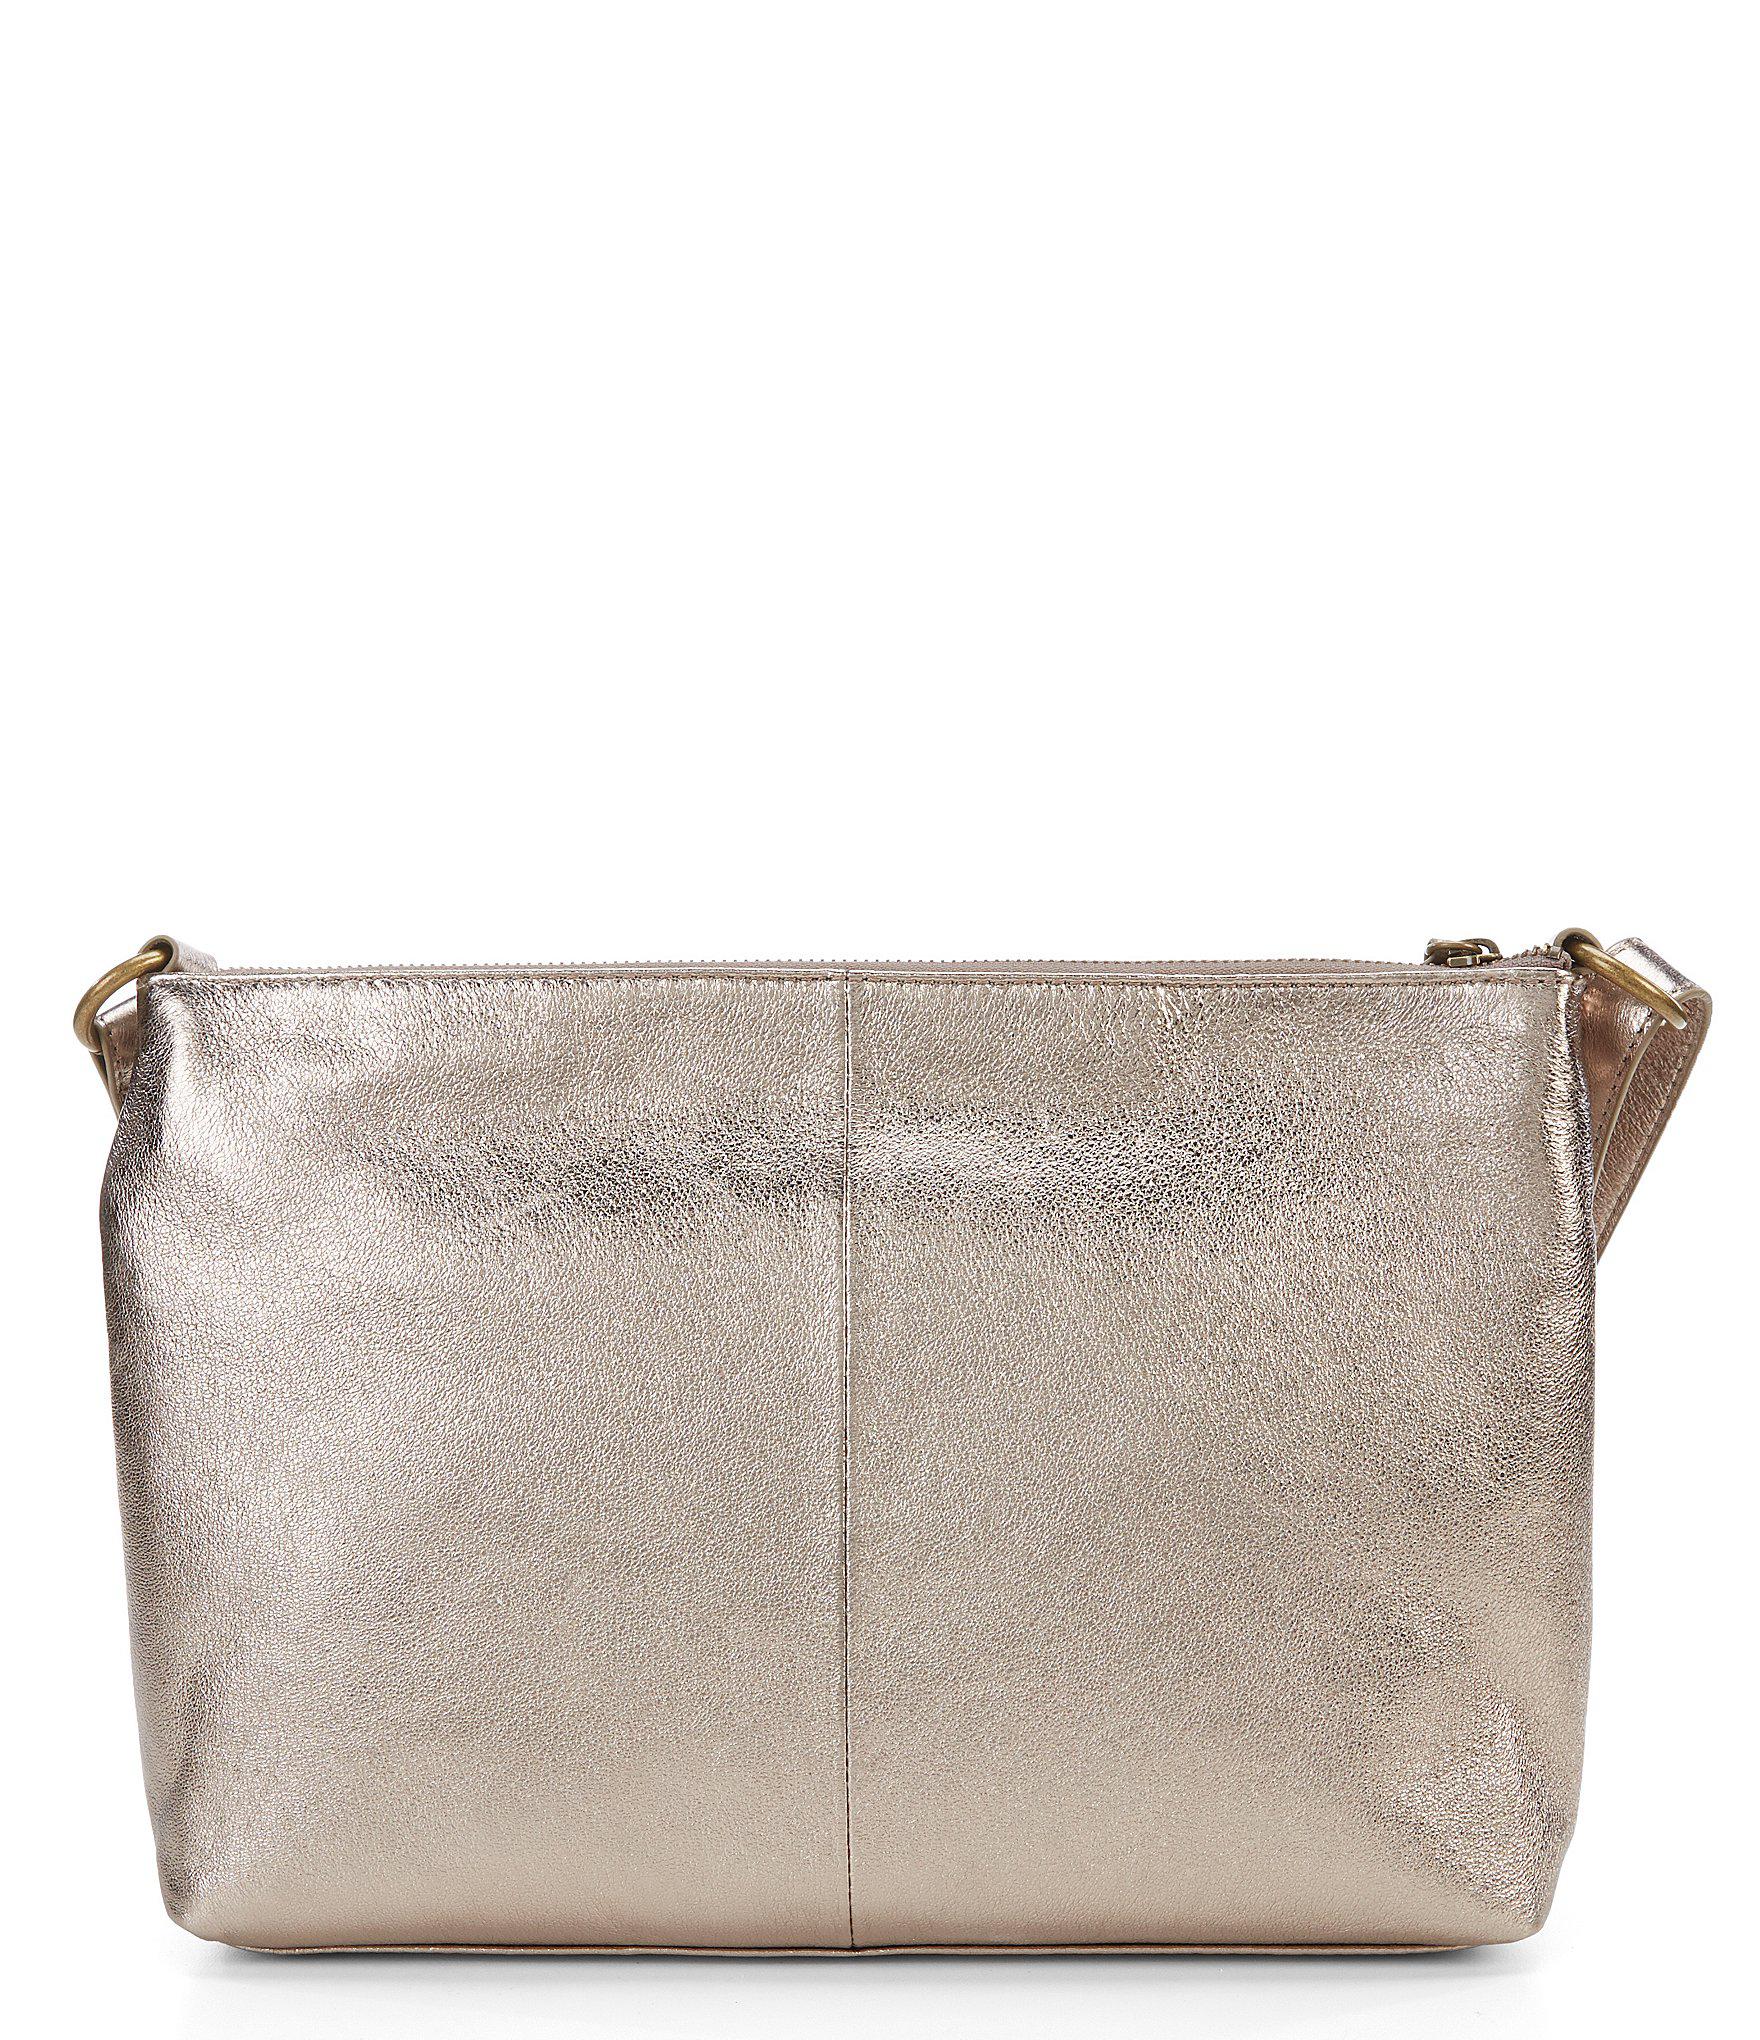 The Sak Reseda Leather Crossbody Bag in Metallic - Lyst